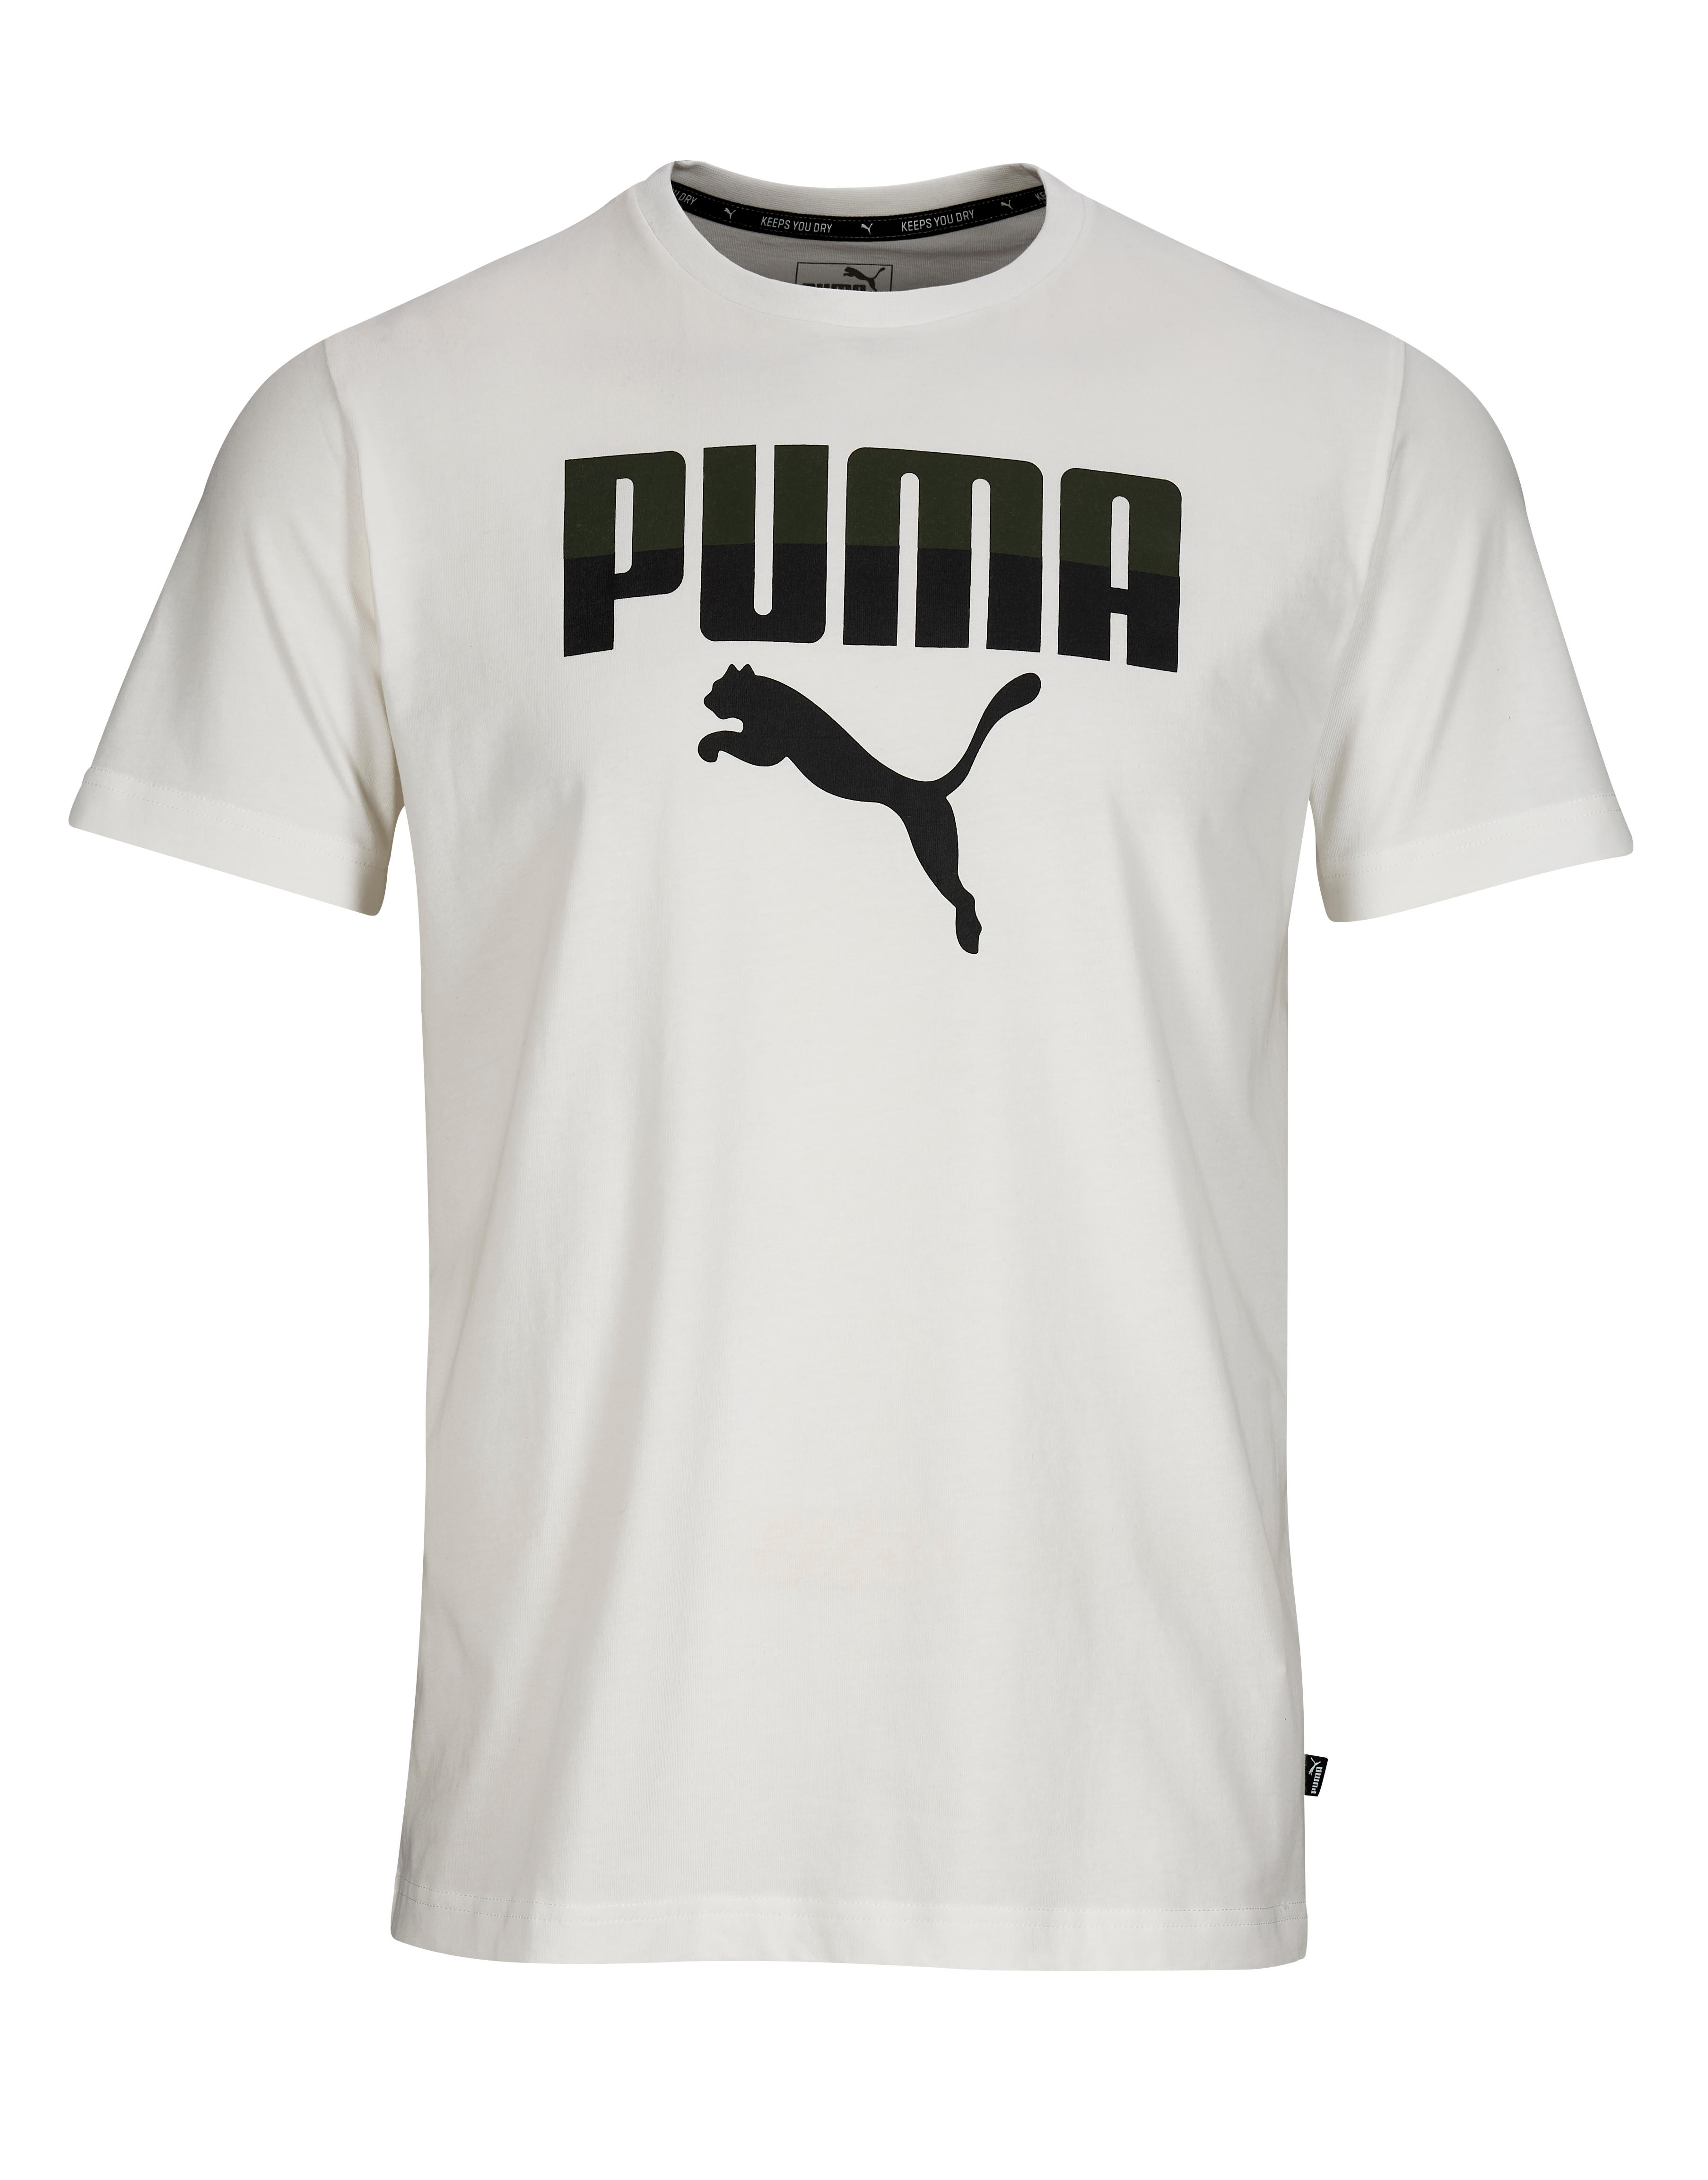 decathlon t shirt puma